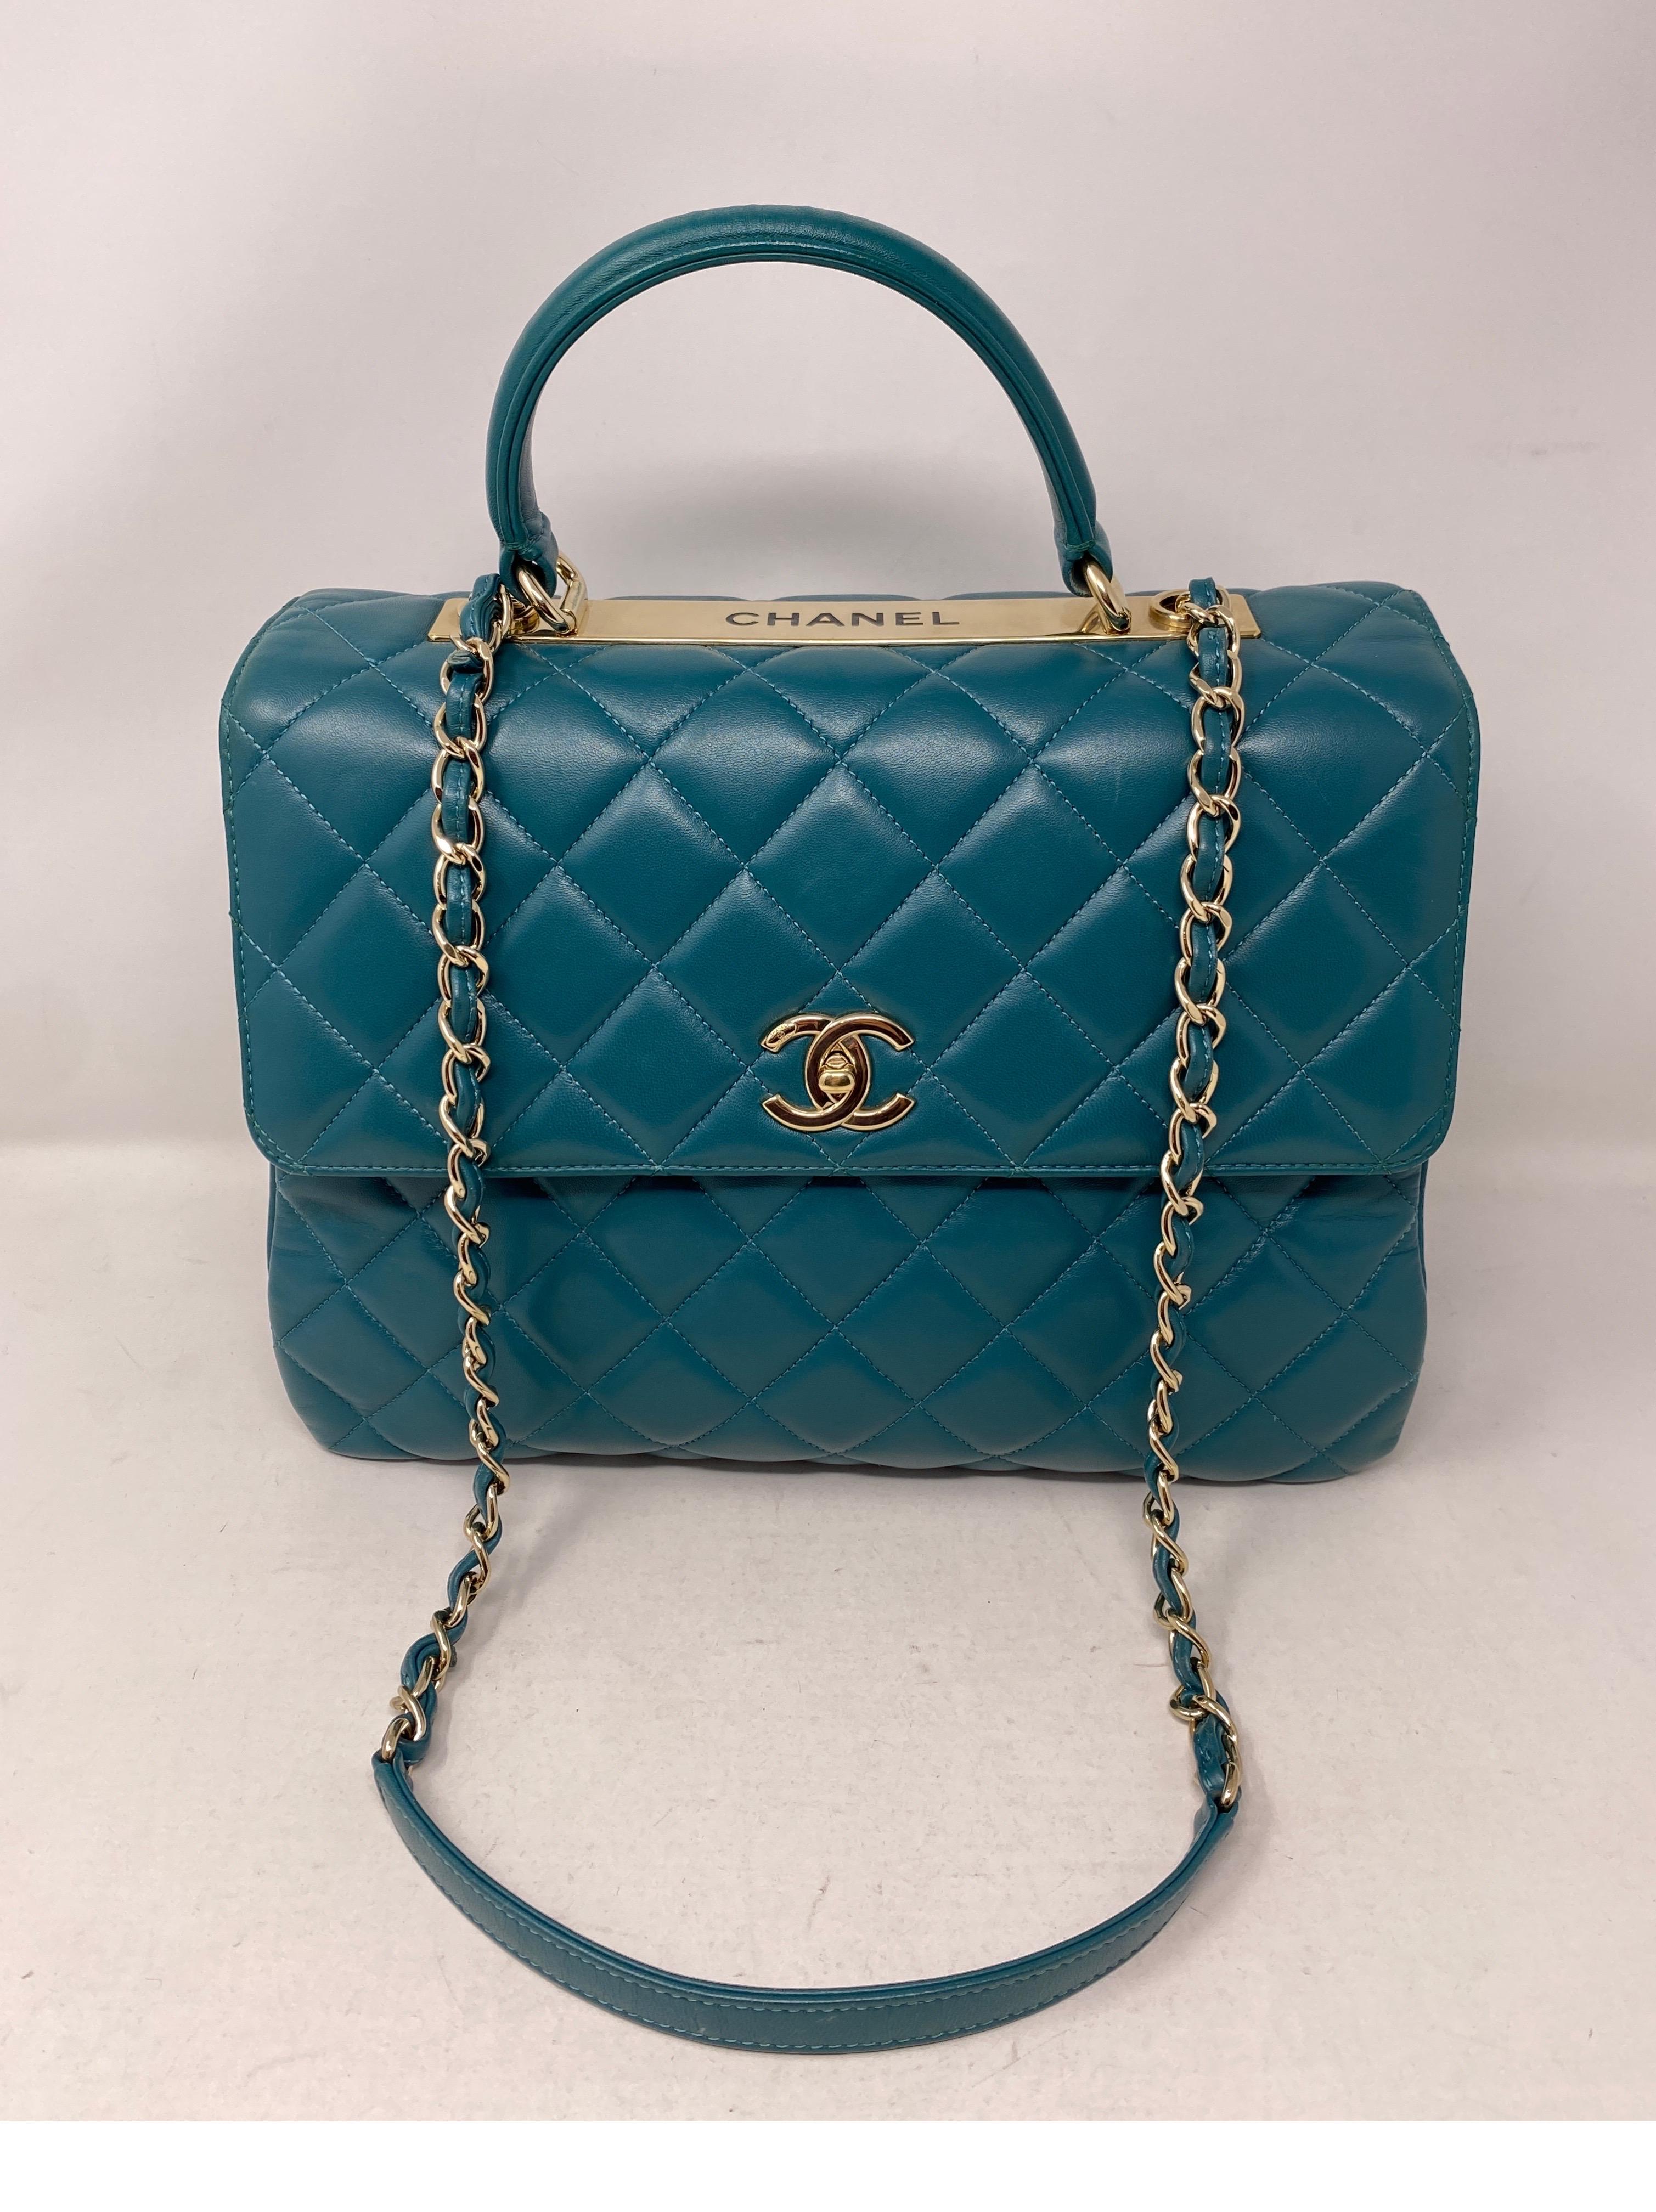 Chanel Trendy Teal Bag 1